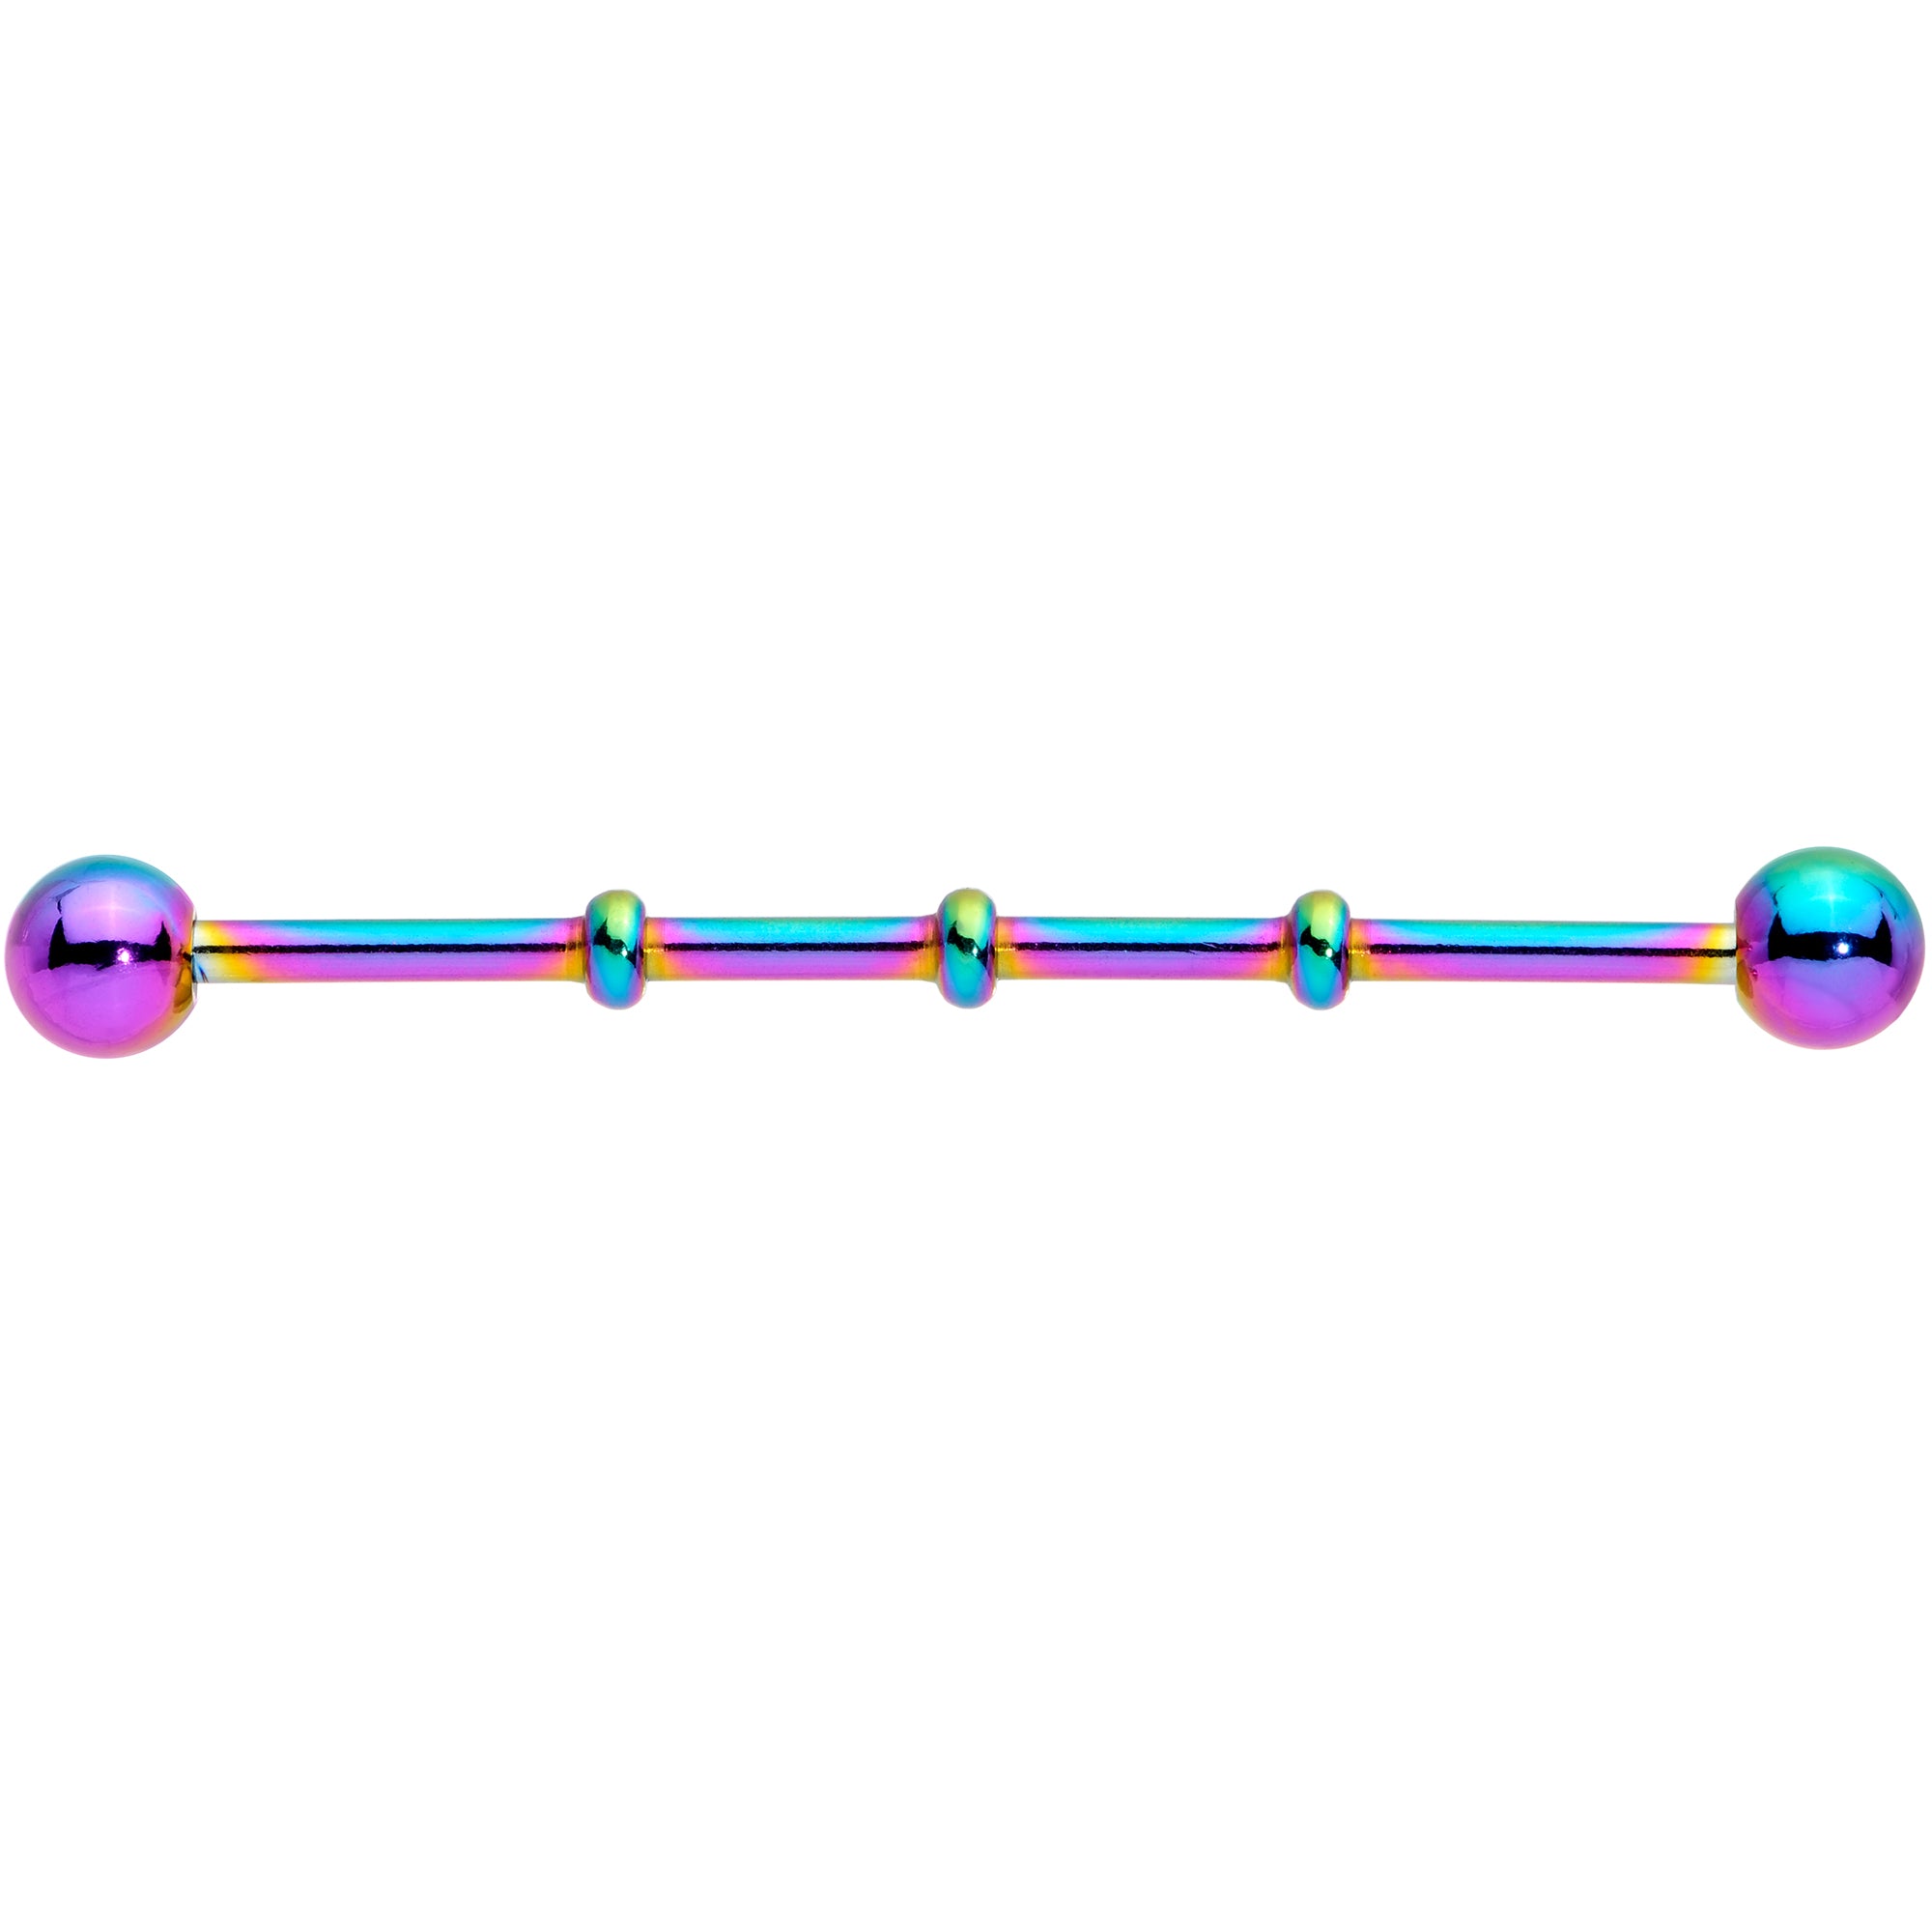 Ball Rainbow Anodized Titanium Industrial Project Bar 40mm